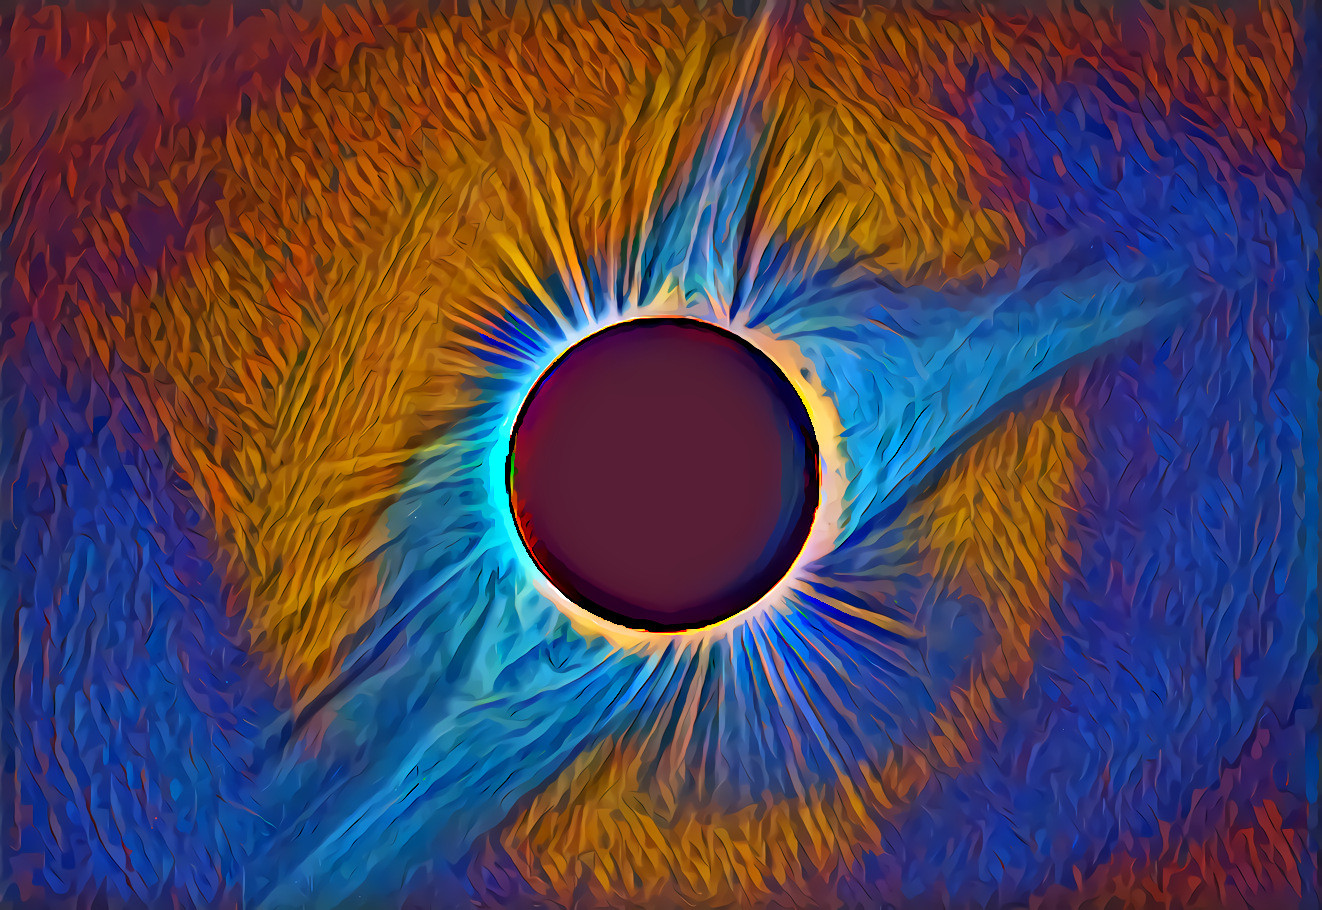 Eclipse Psychedelia